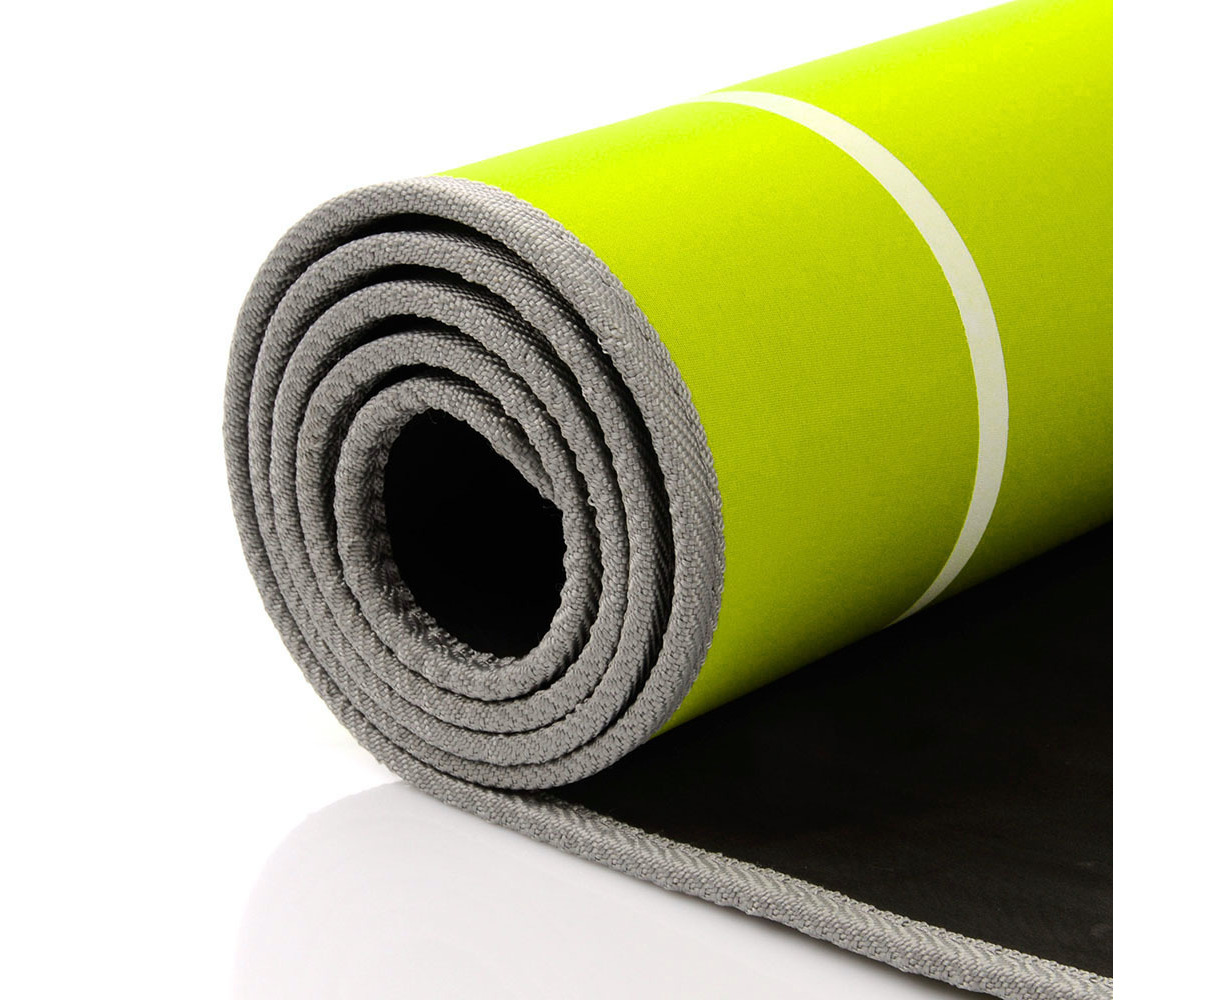 METEOR Non-slip Yoga Mat,Thick Yoga Mat,TPE Yoga Mat,6mm Yoga Mat,Exercise  Mat,Pilates Mat,Workout Mat,Gym Mat-6mm Thickness,183x65cm,Grey Black